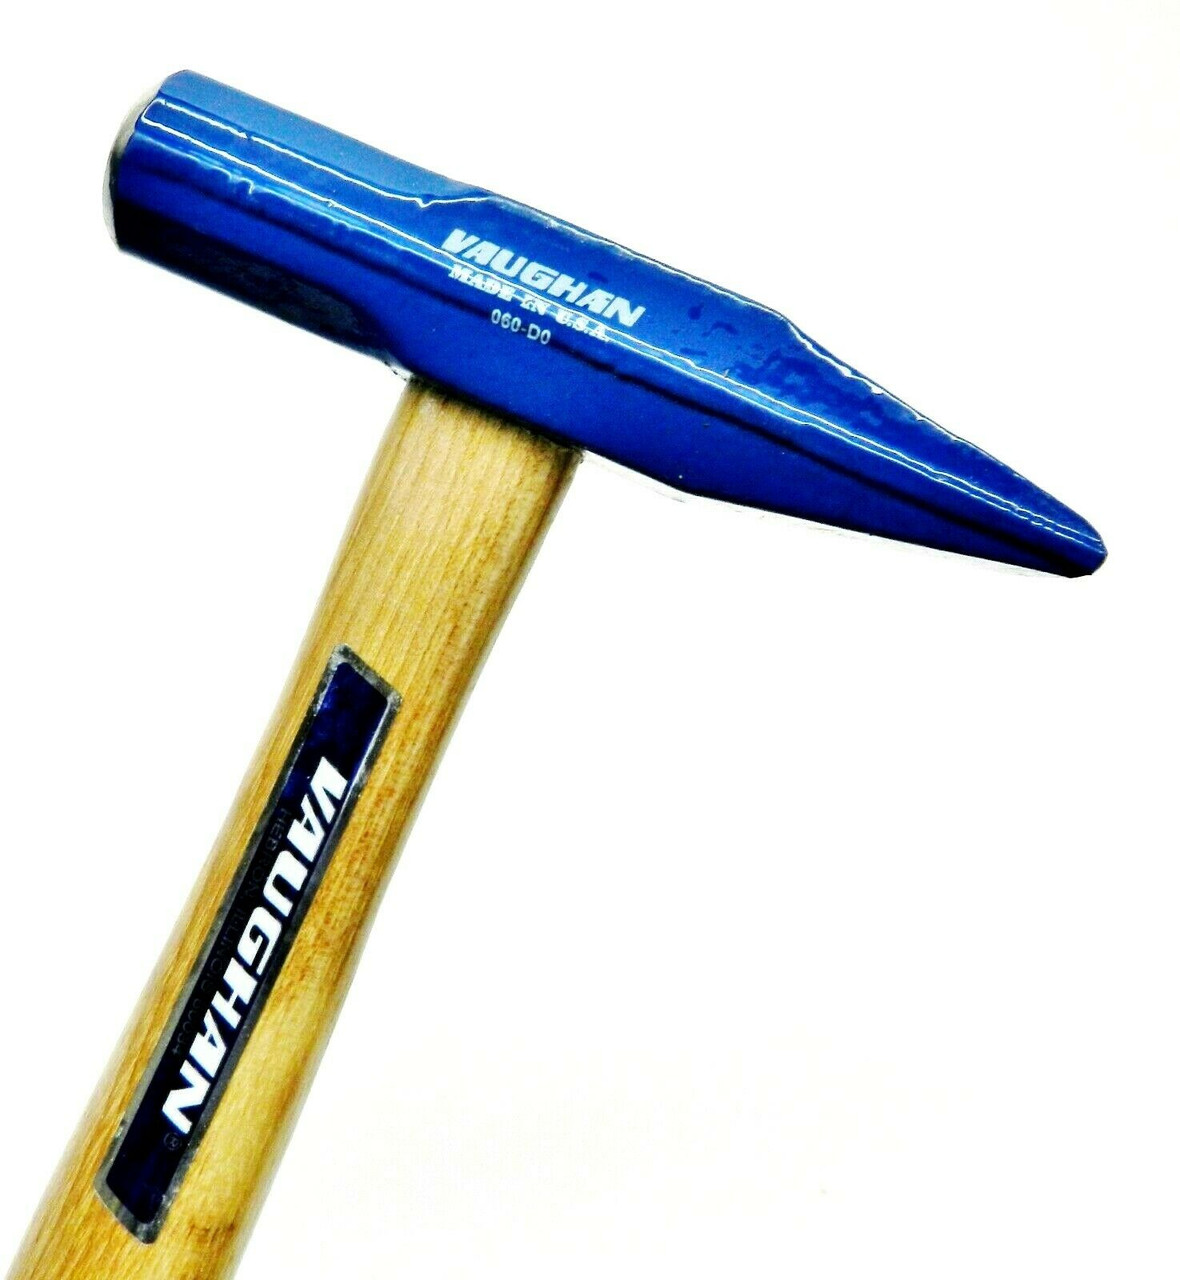 Steel Tinner's Hammer, Shop Hand Tools